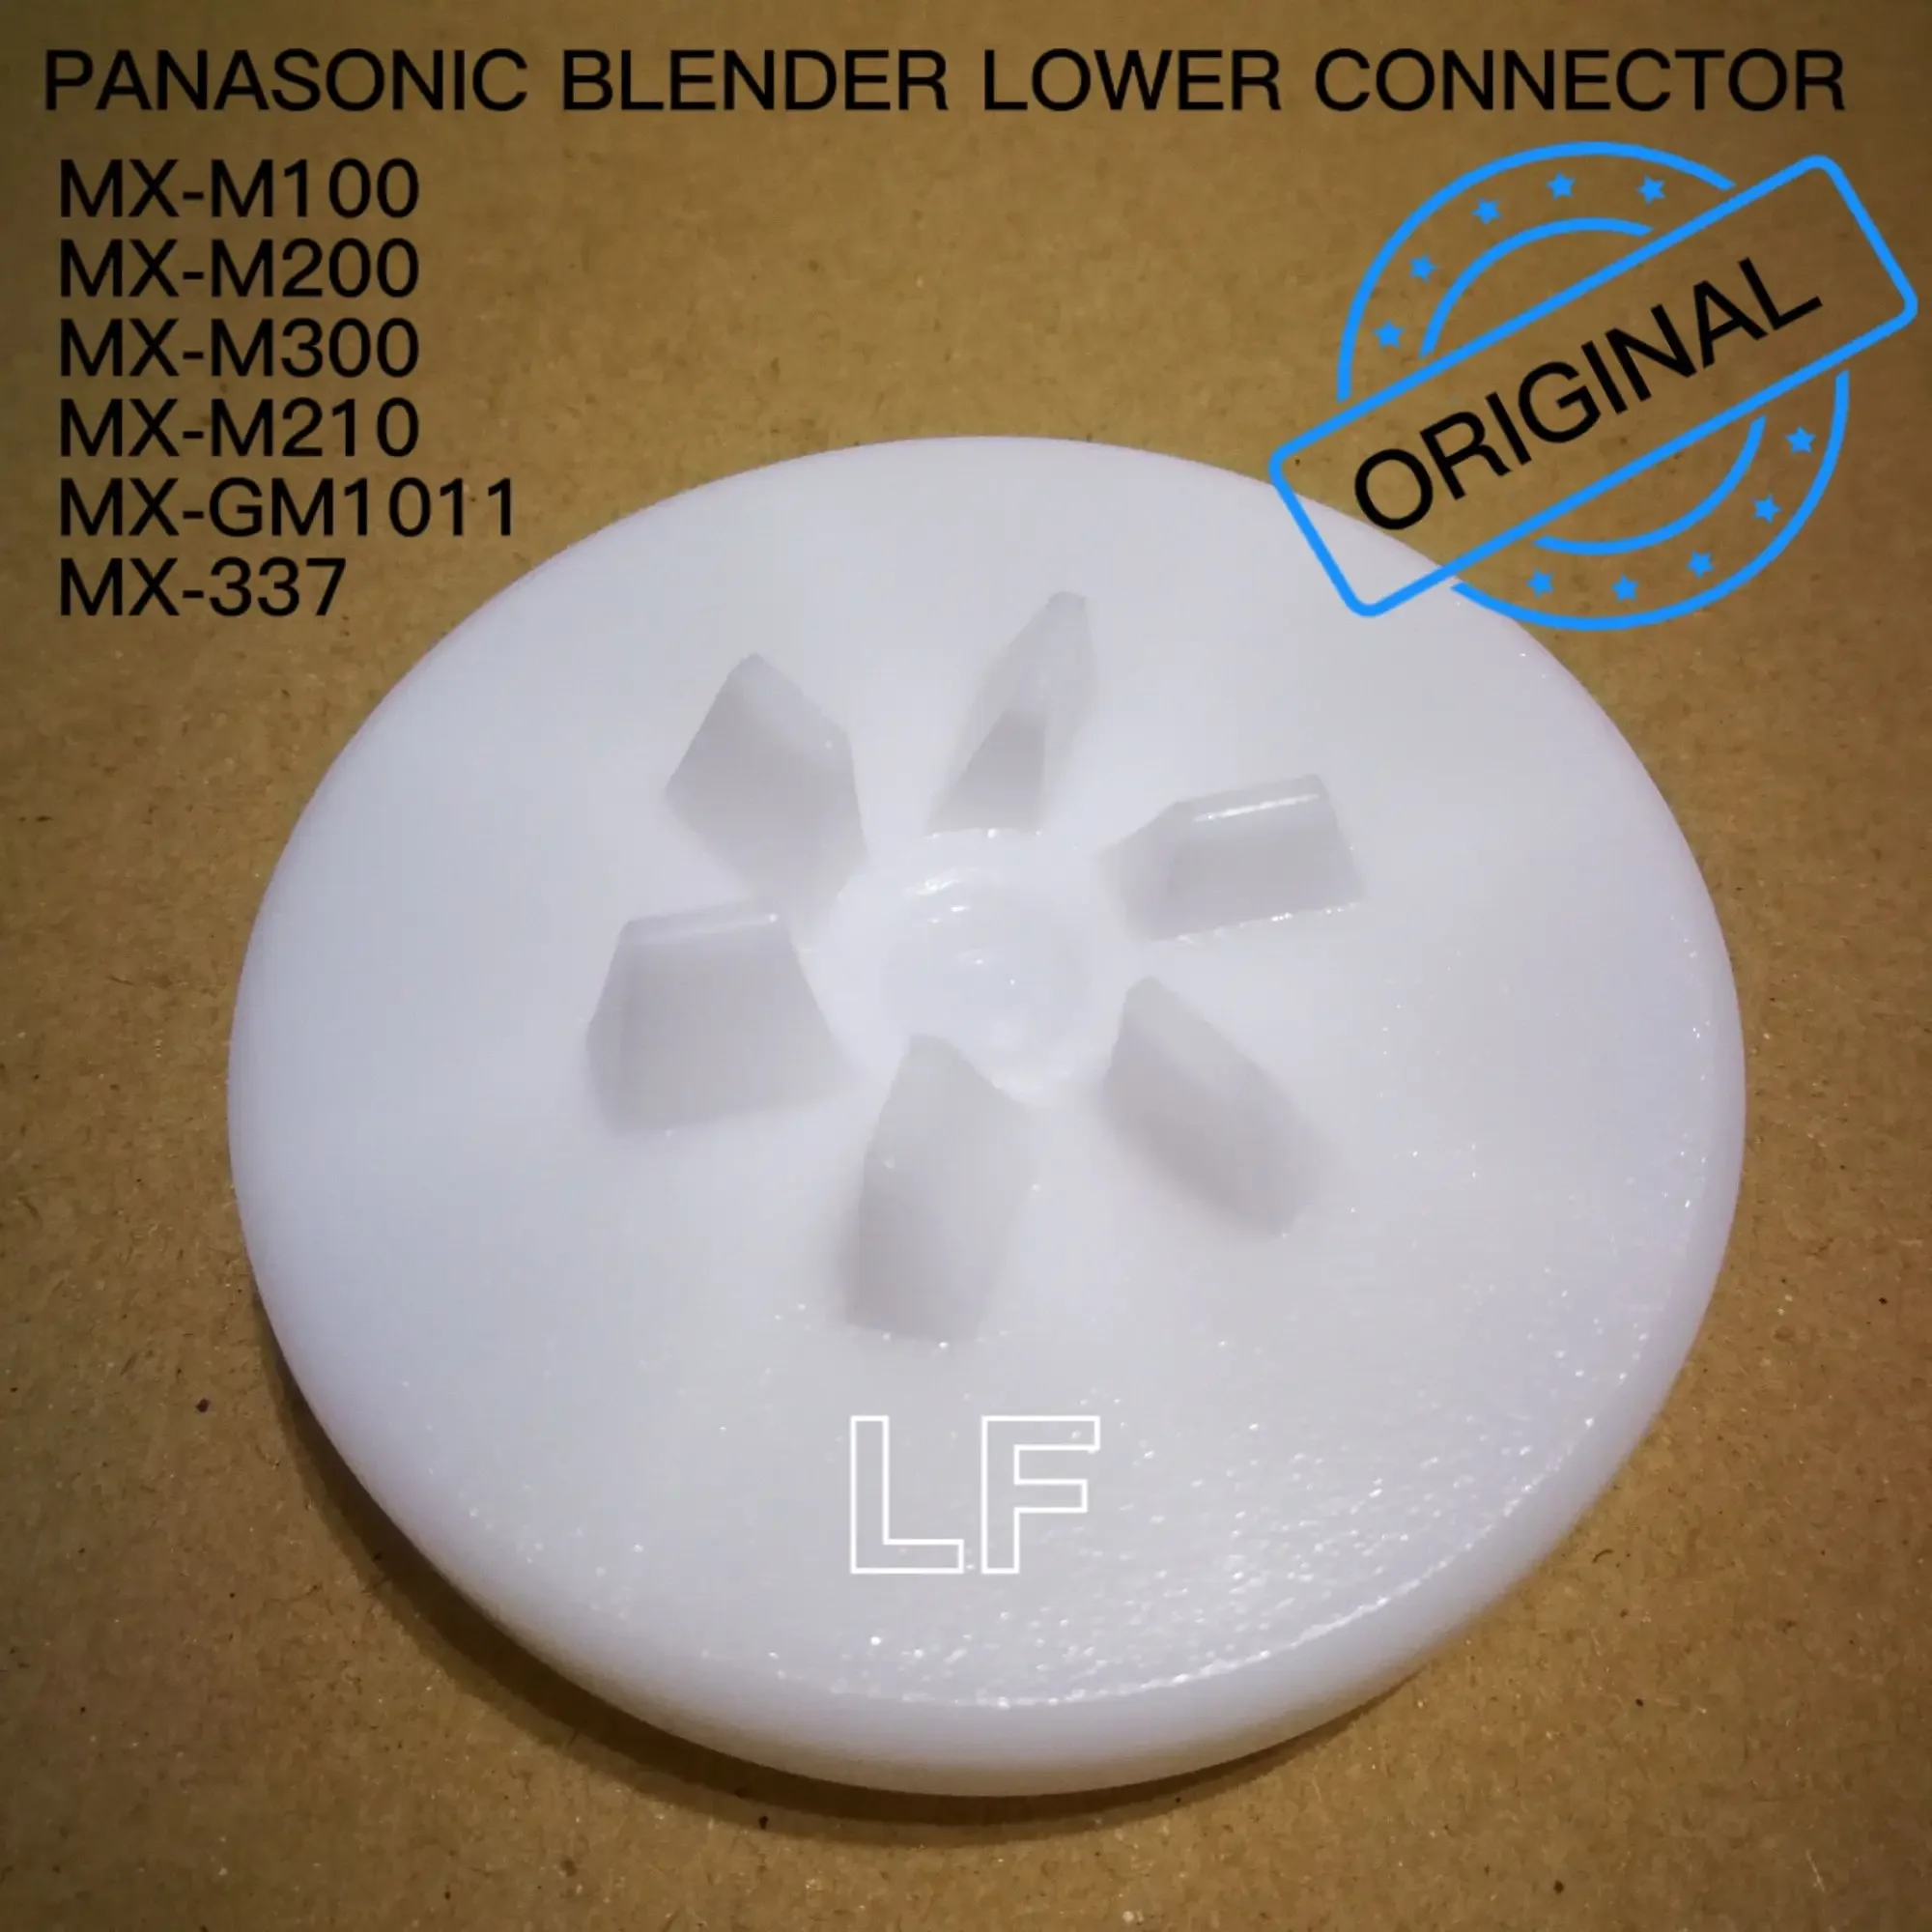 Panasonic blender lower connector MX-M210/MX-M100/MX-M200/MX-M300/MX-337/MX-GM-1011